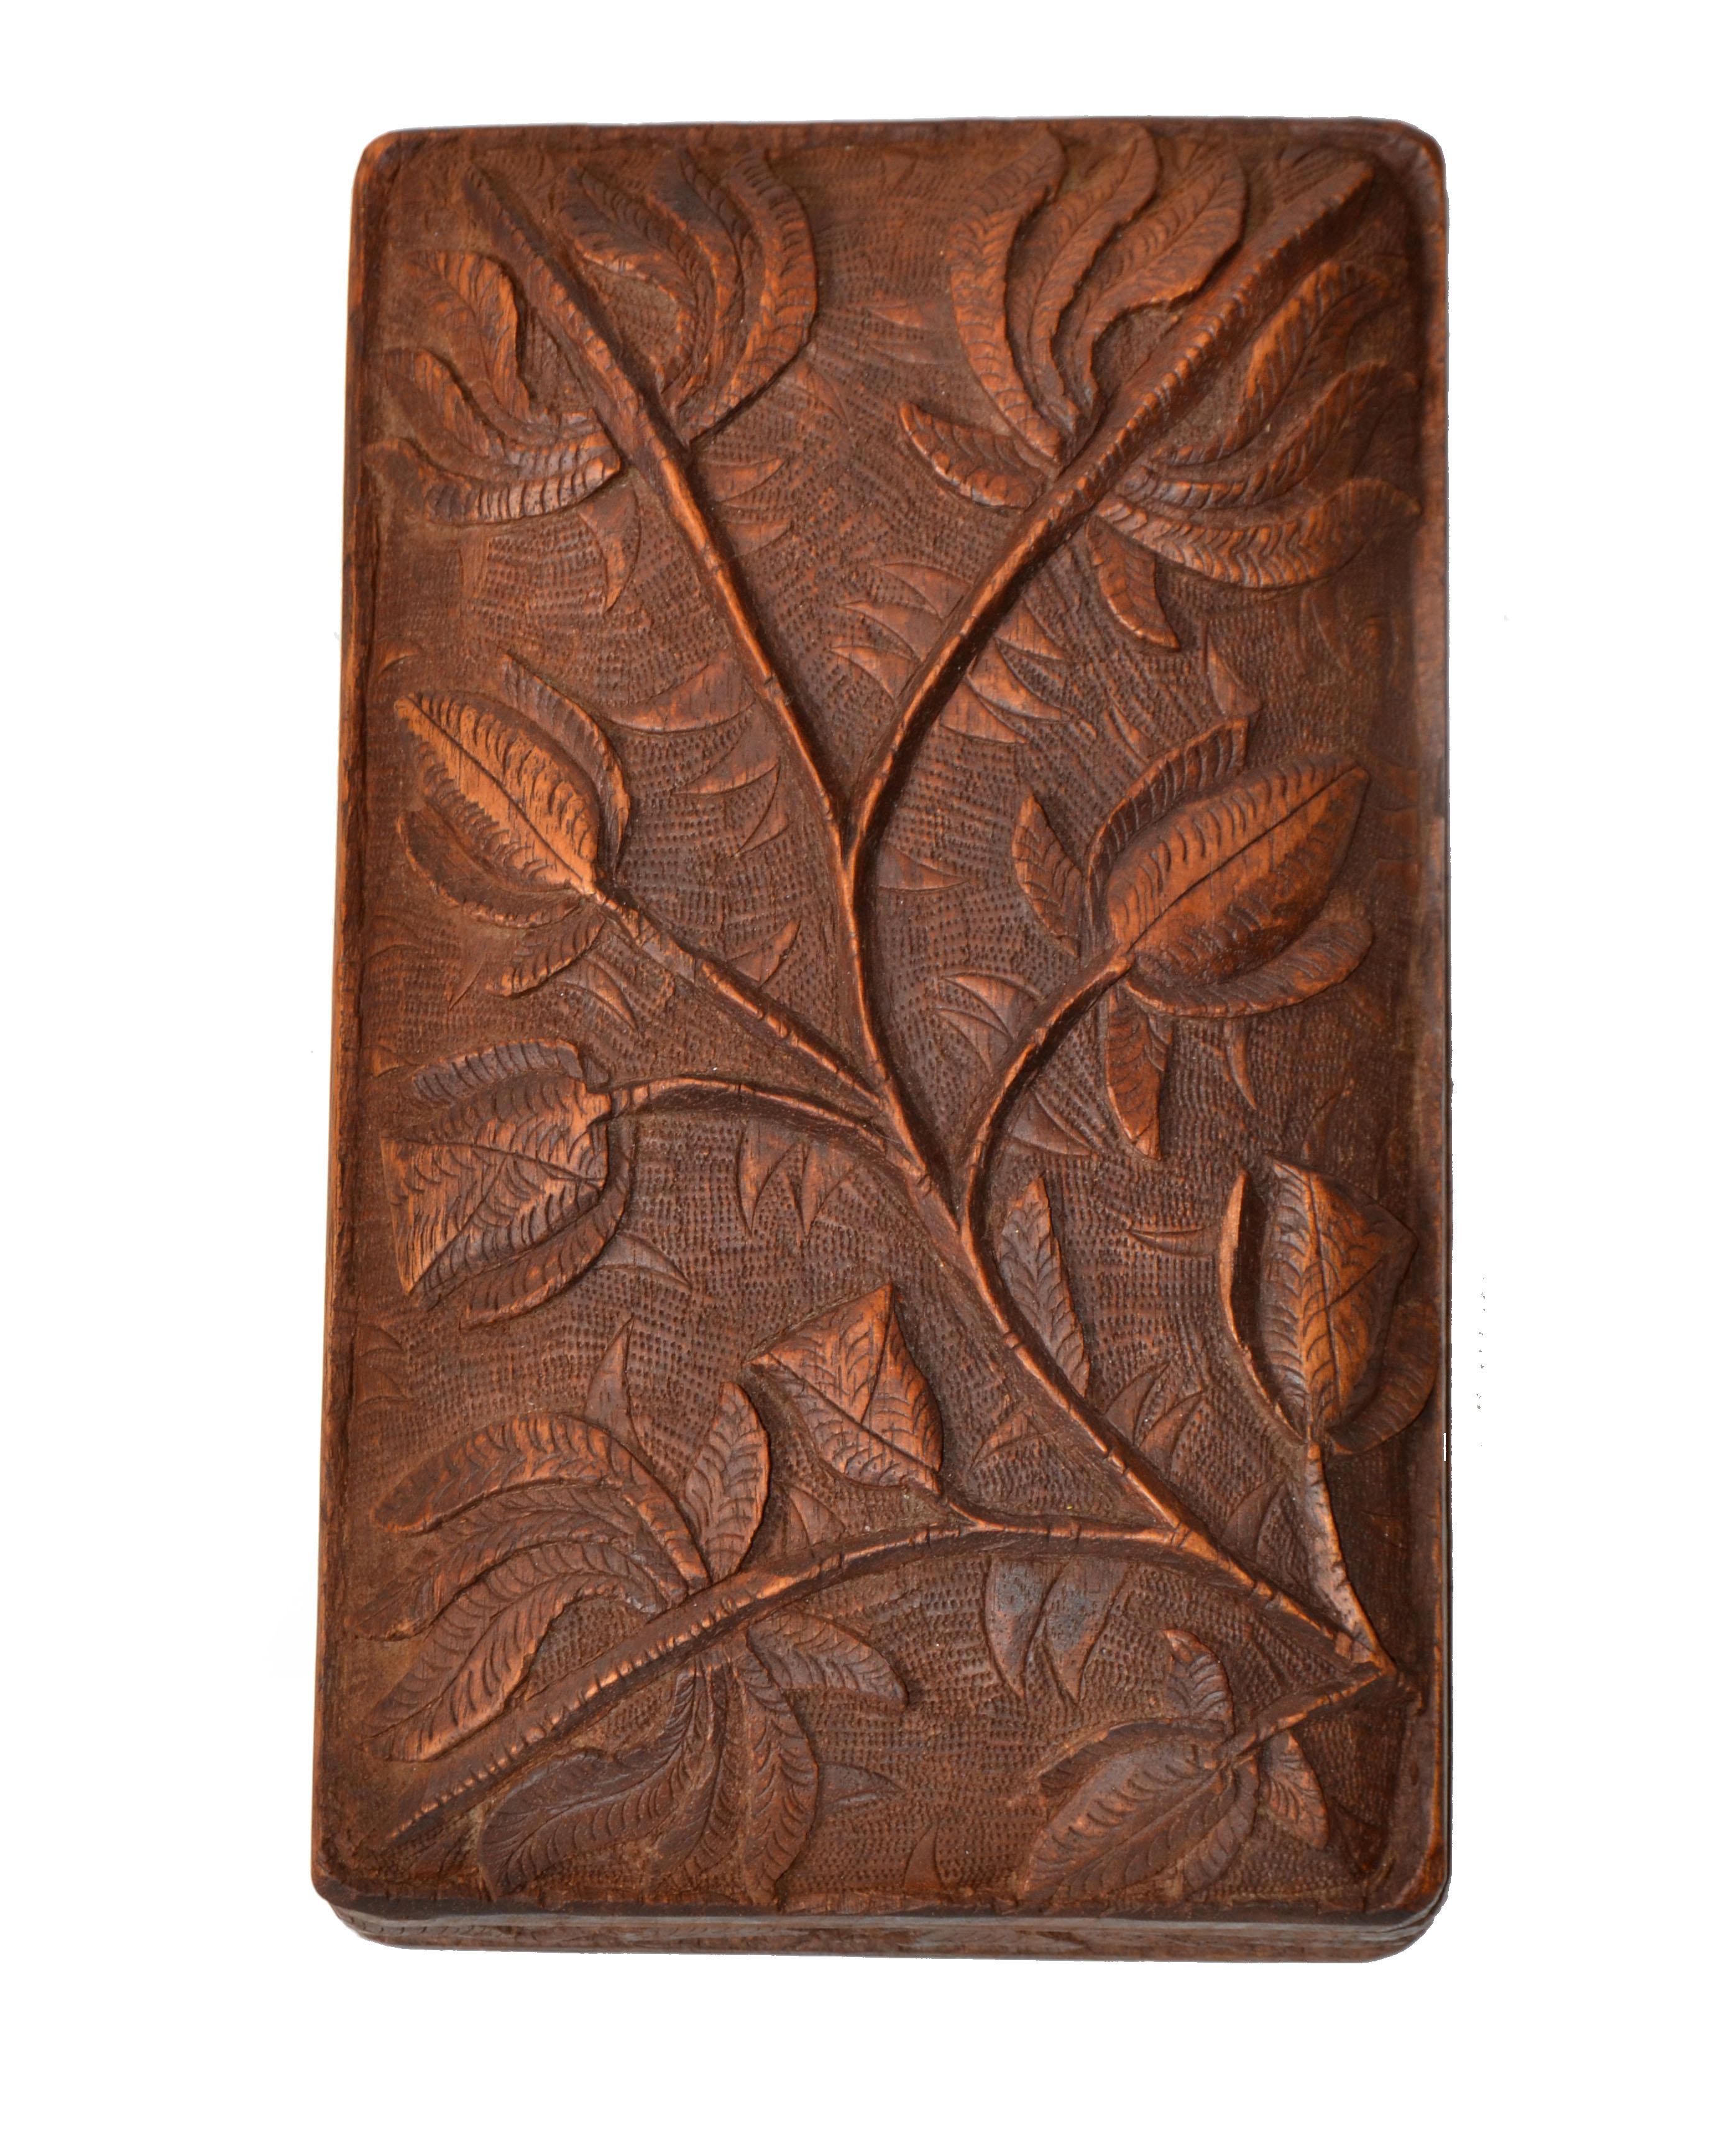 Folk Art Vintage Handcrafted and Carved Wood Box Leaf Motif, Jewelry Box, Keepsake Box For Sale